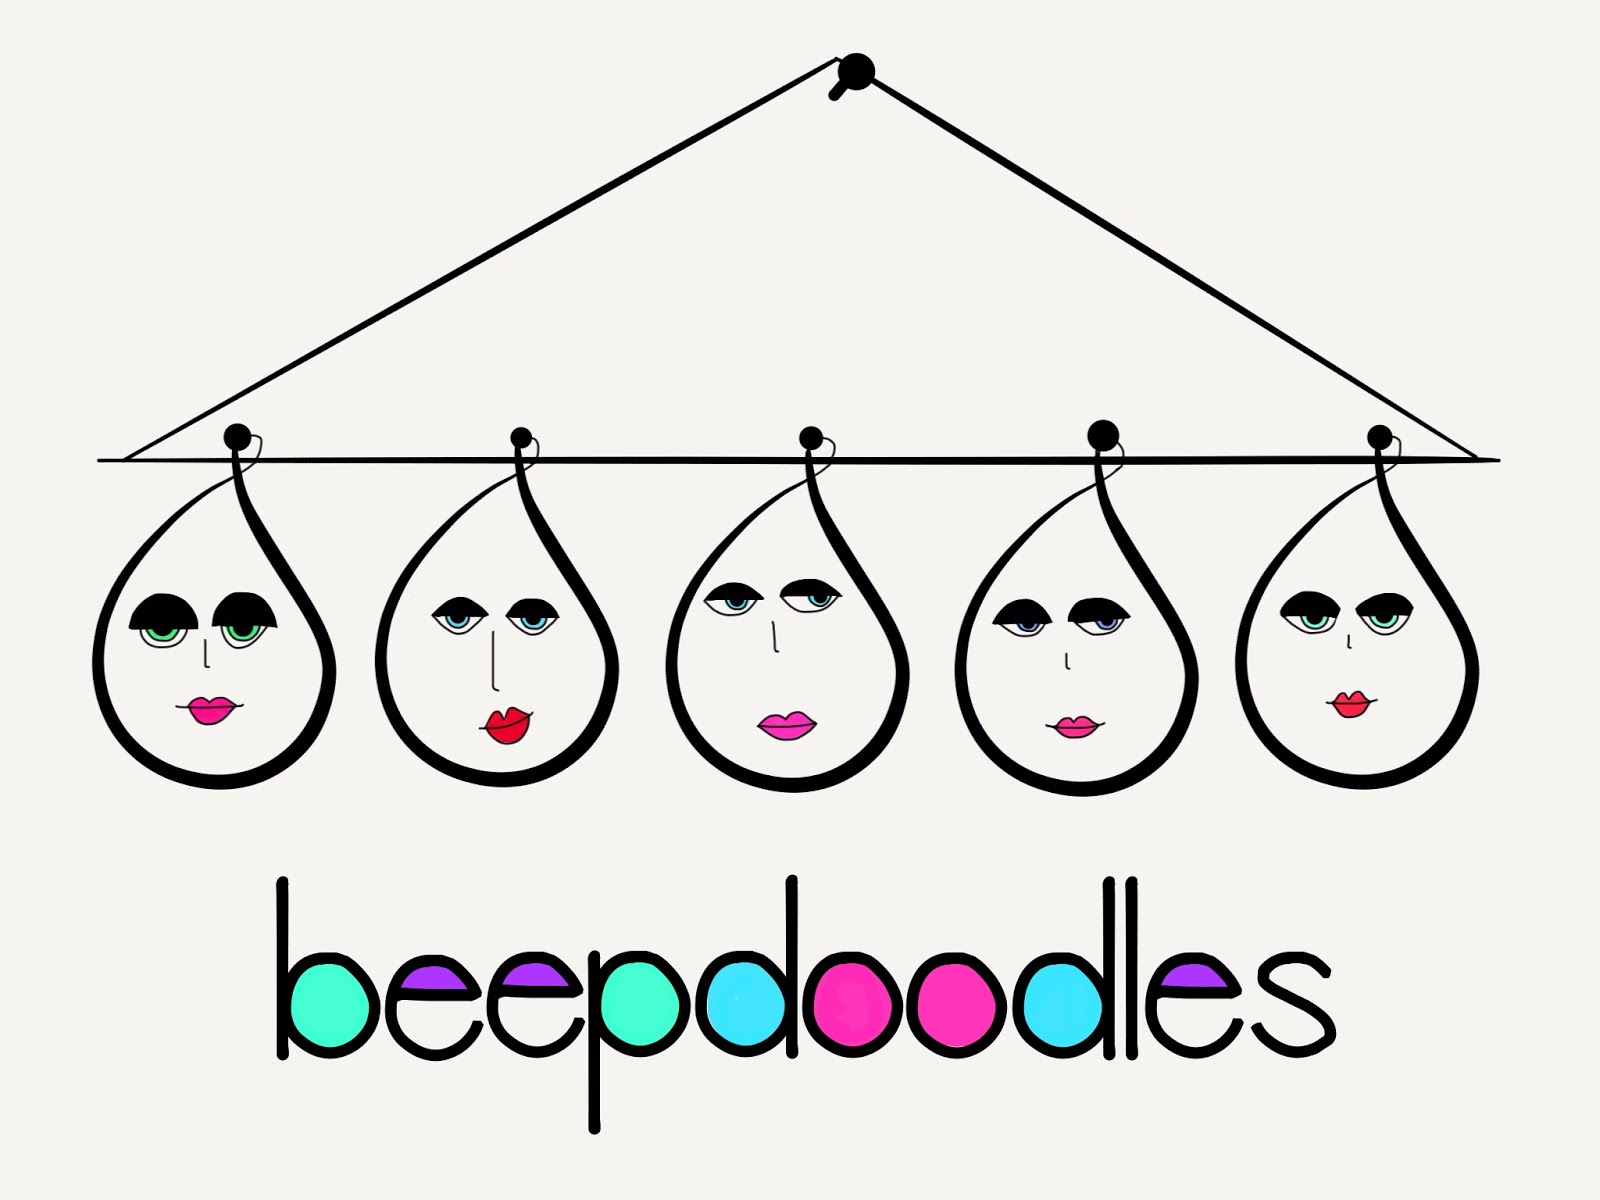 Beepdoodles on eBay